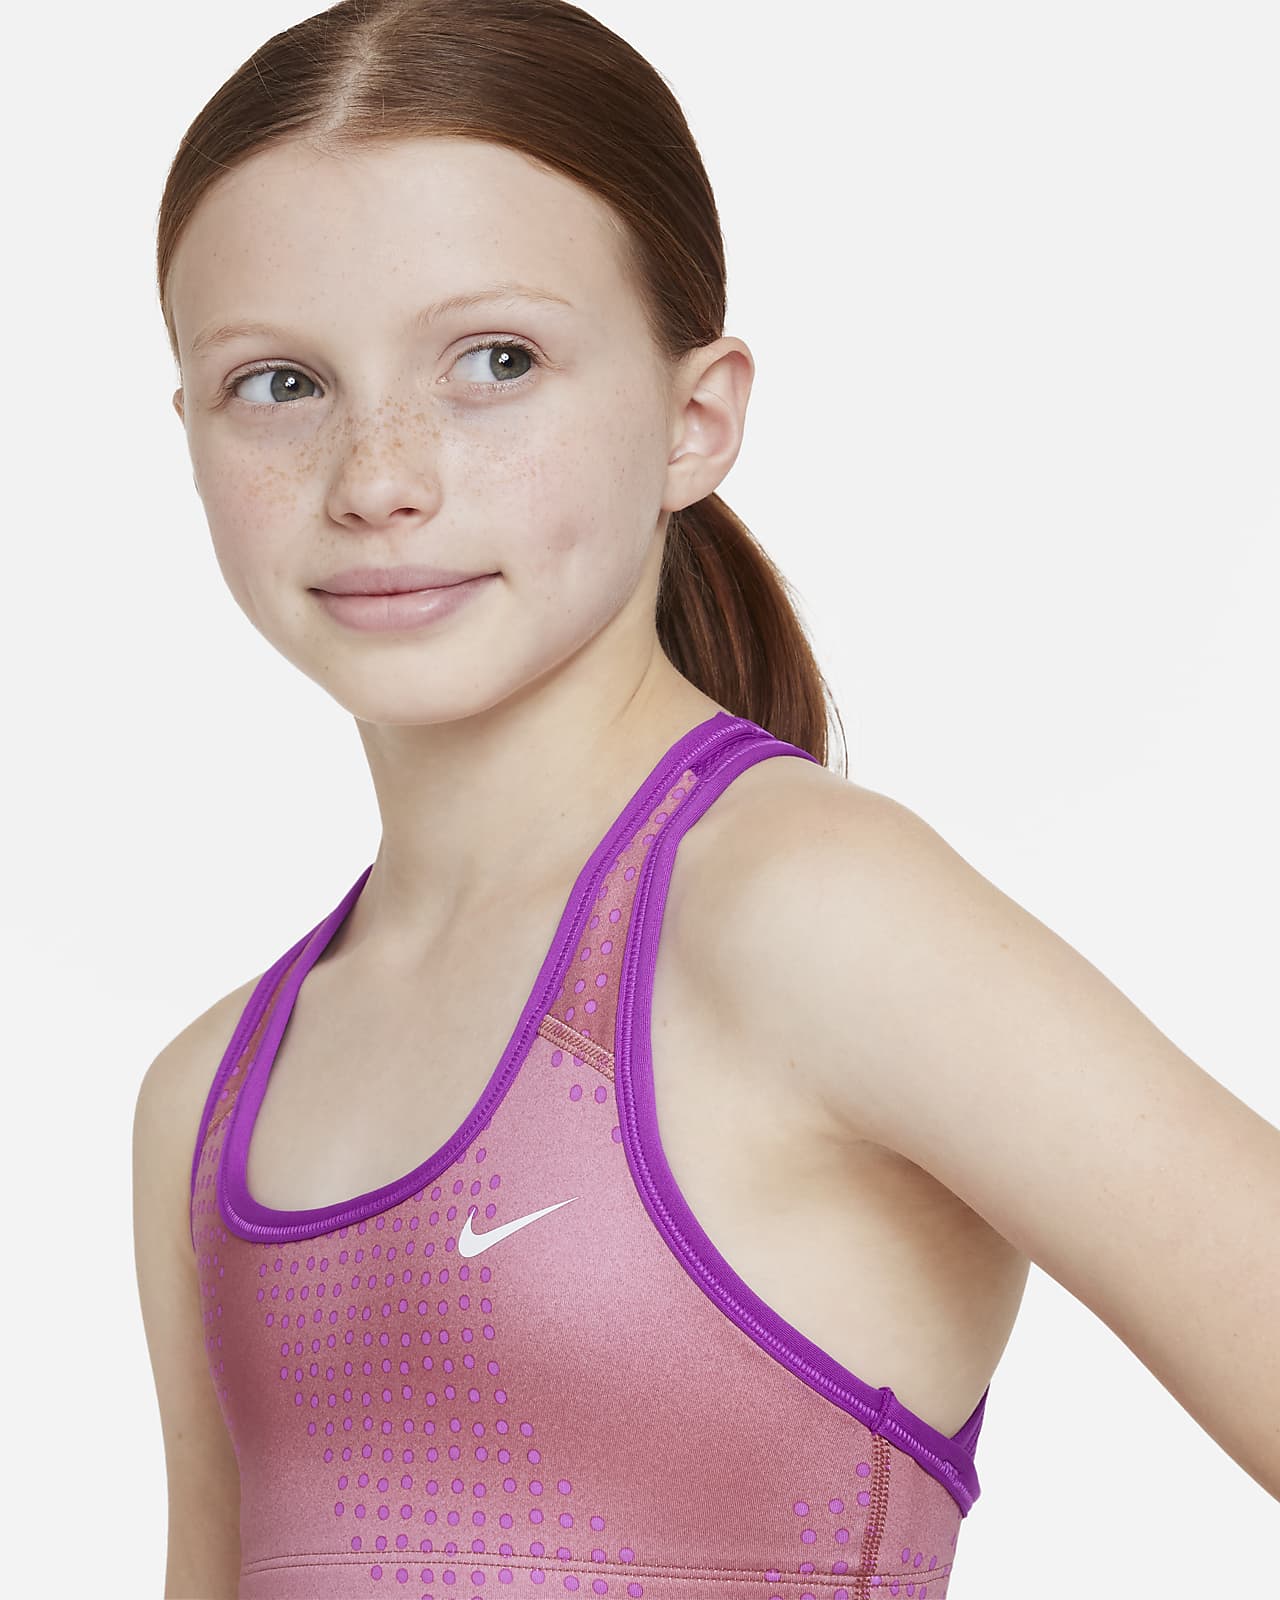 Kids Sports Bras. Nike ZA